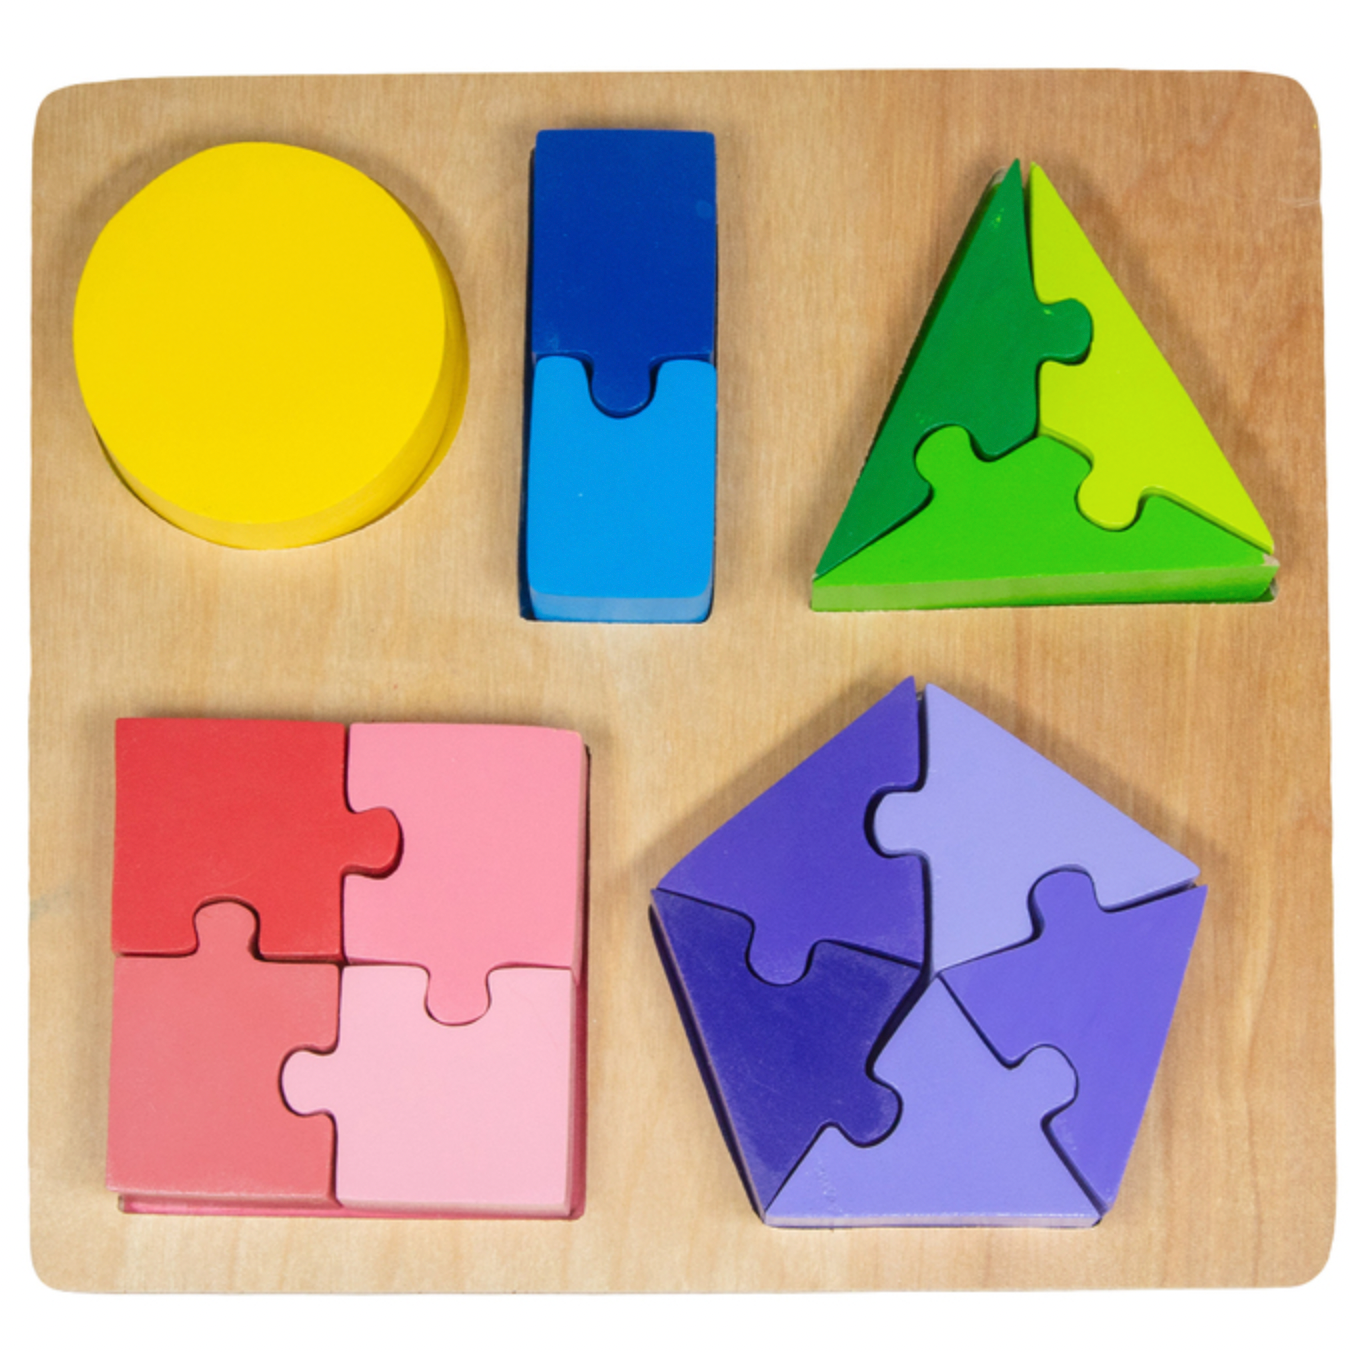 Jigsaw Shape Fraction Puzzle